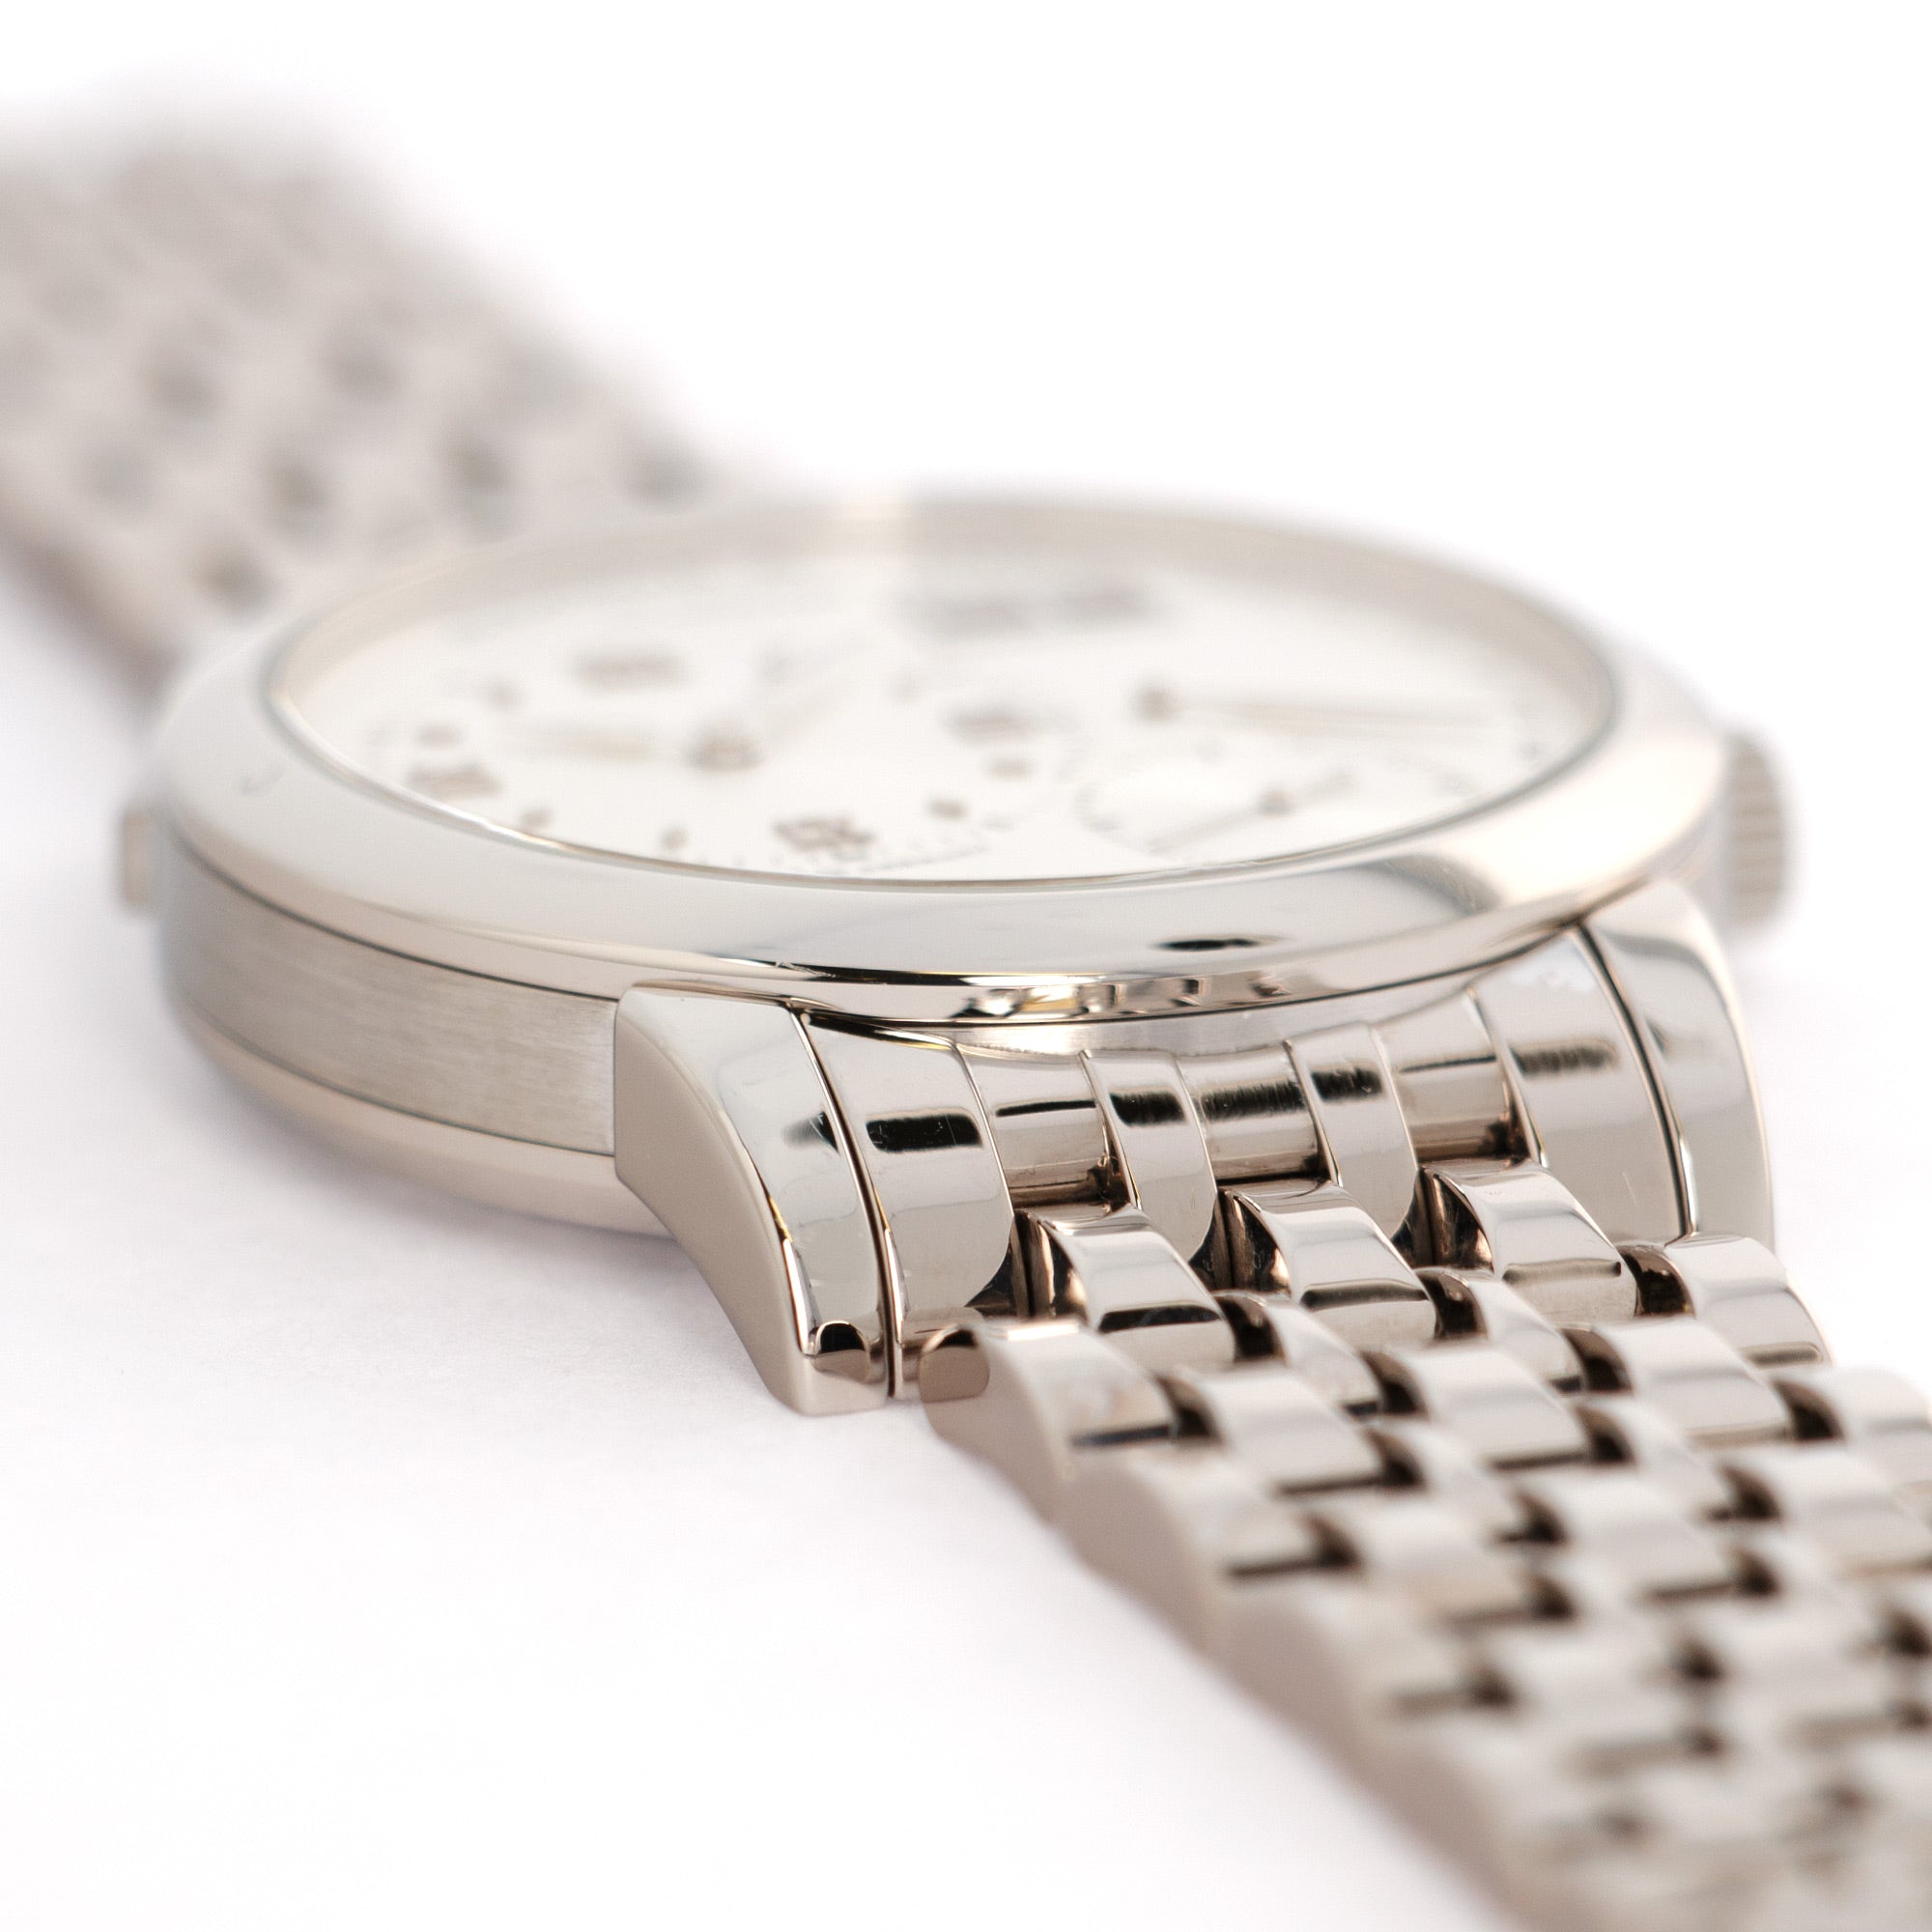 A. Lange & Sohne - A. Lange & Sohne White Gold Lange 1 Bracelet Watch - The Keystone Watches